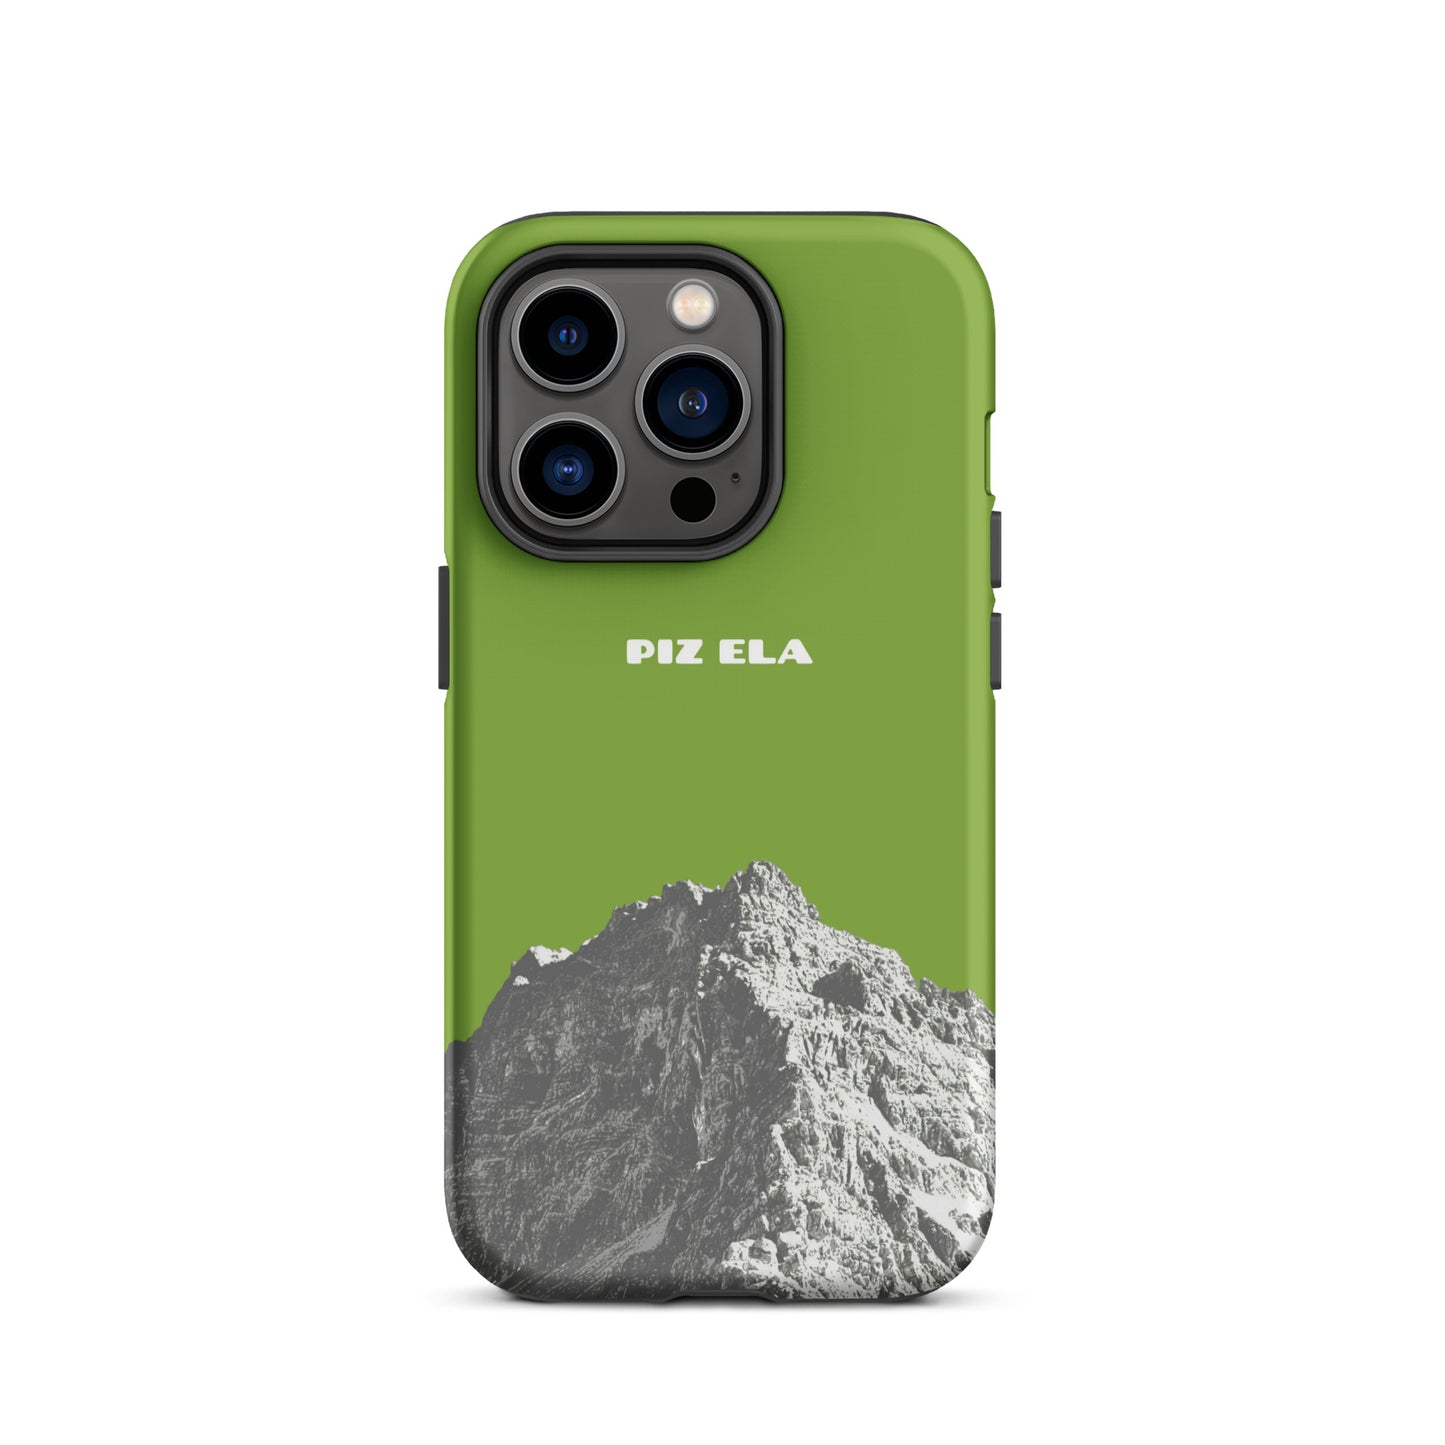 iPhone Case - Piz Ela - Gelbgrün